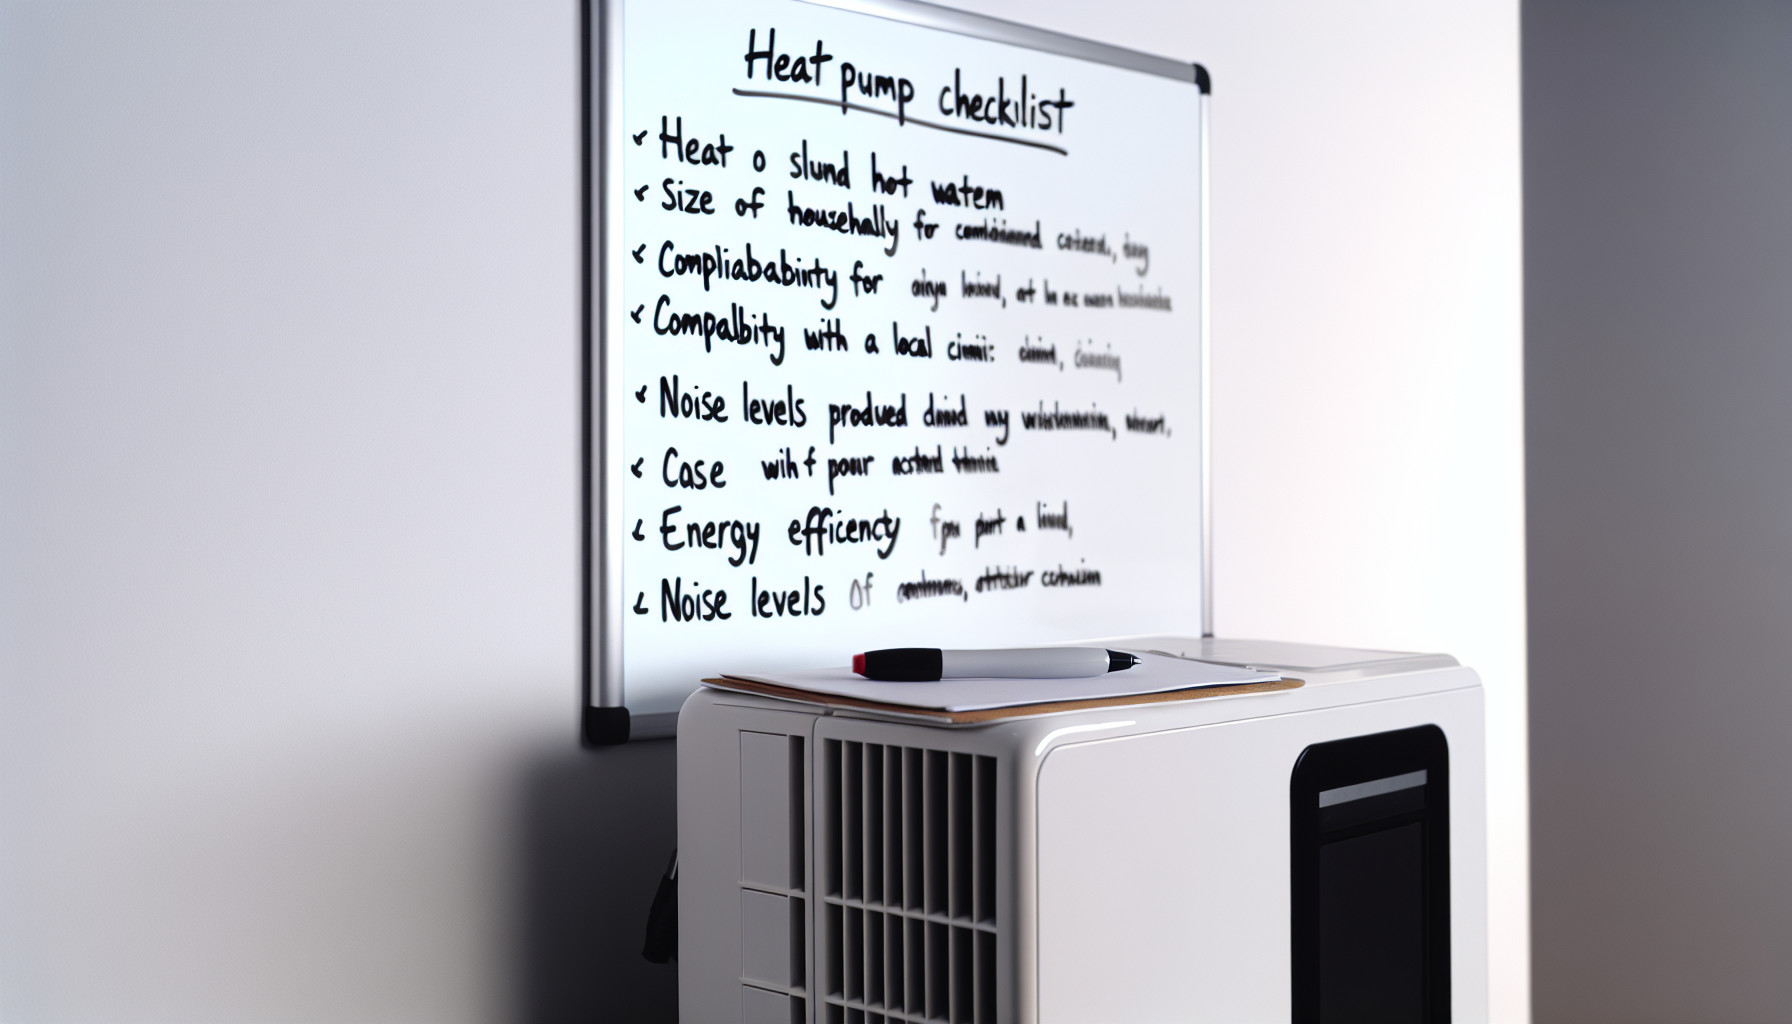 Factors to Consider When Choosing a Heat Pump Hot Water System